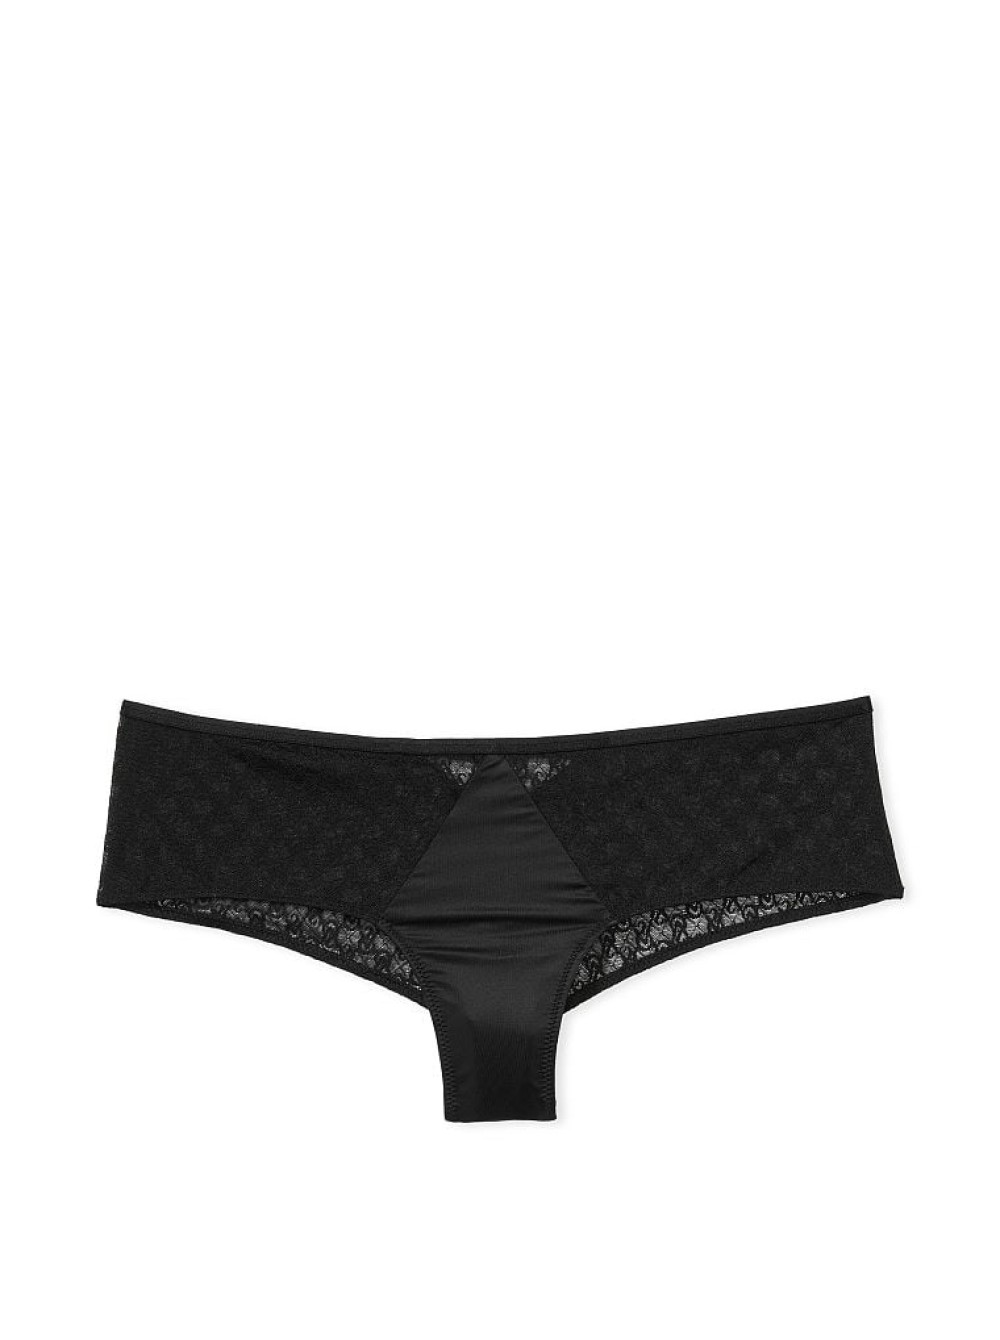 Трусики Icon by Victoria's Secret Lace Cheeky Panty Black ✓ купить недорого  в Киеве, цена в Украине — SecretAngeL